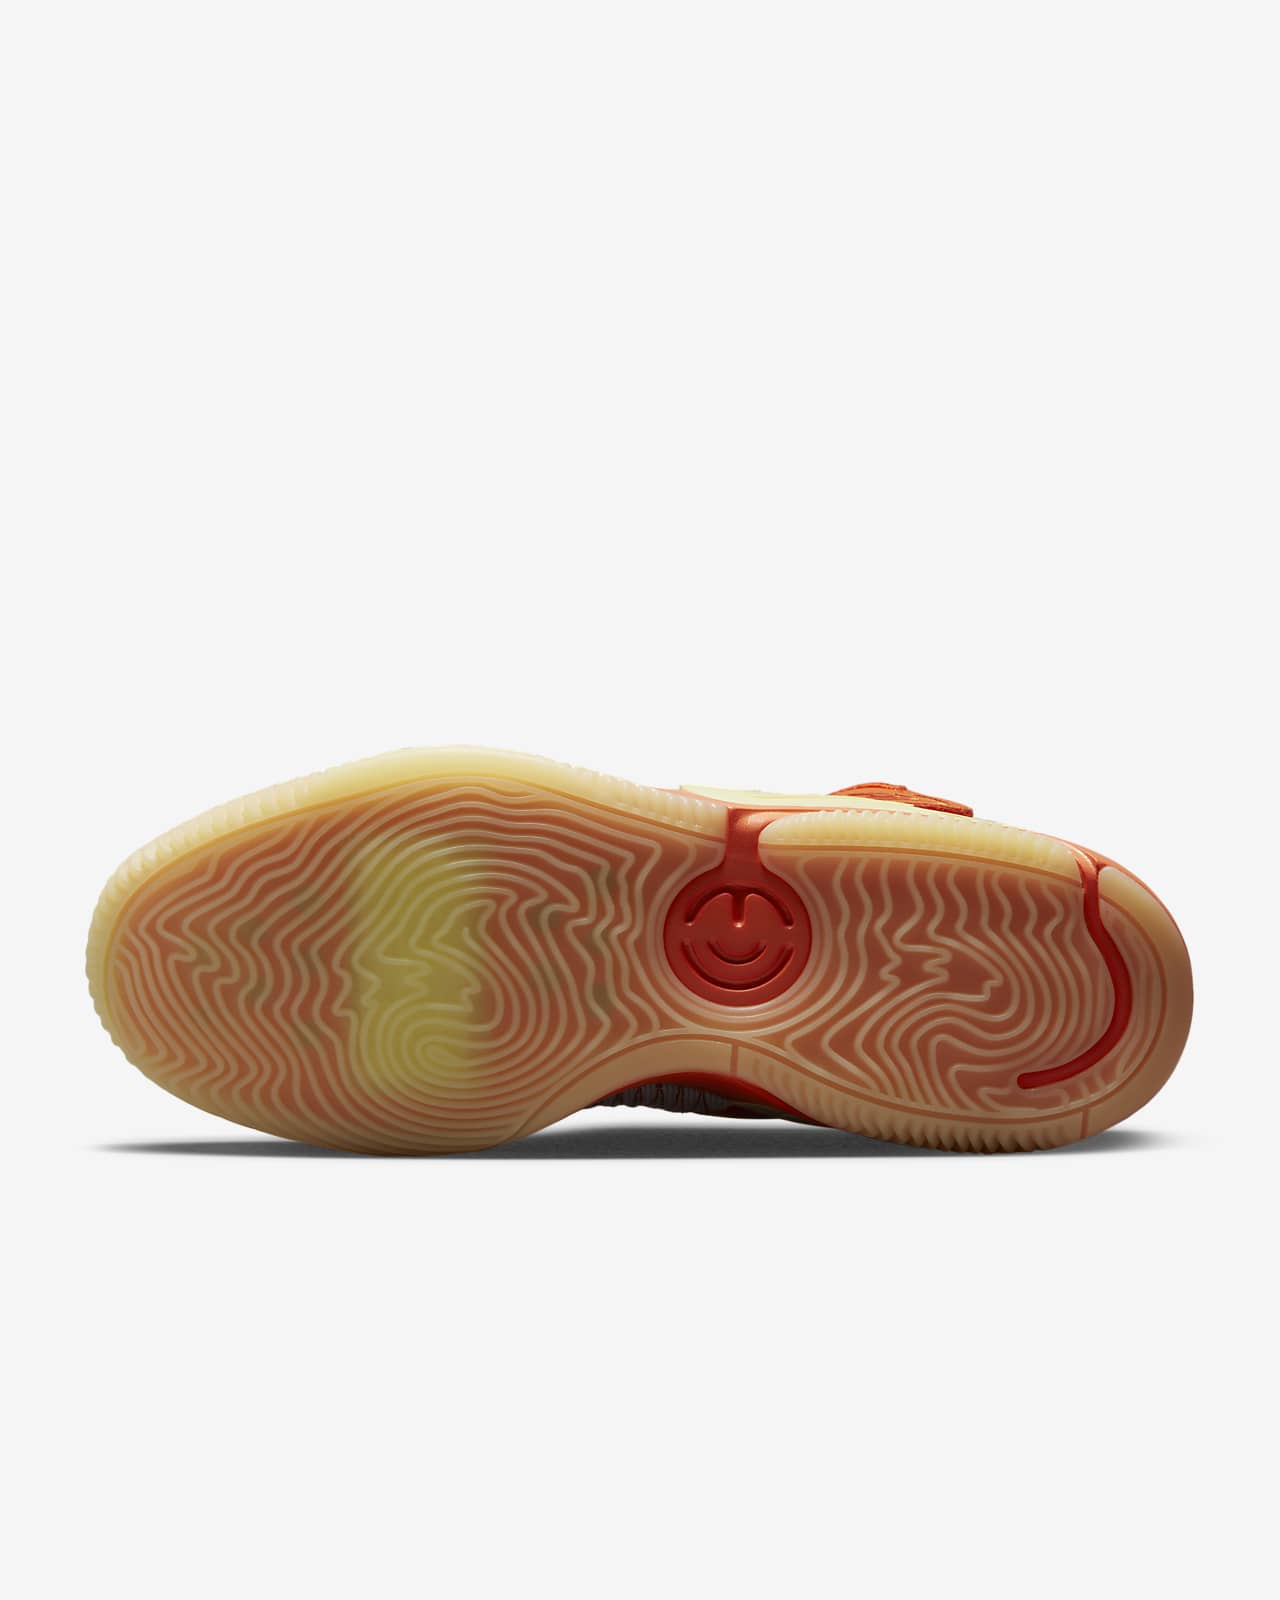 Nike Air Deldon "Hoodie" Basketball Shoes